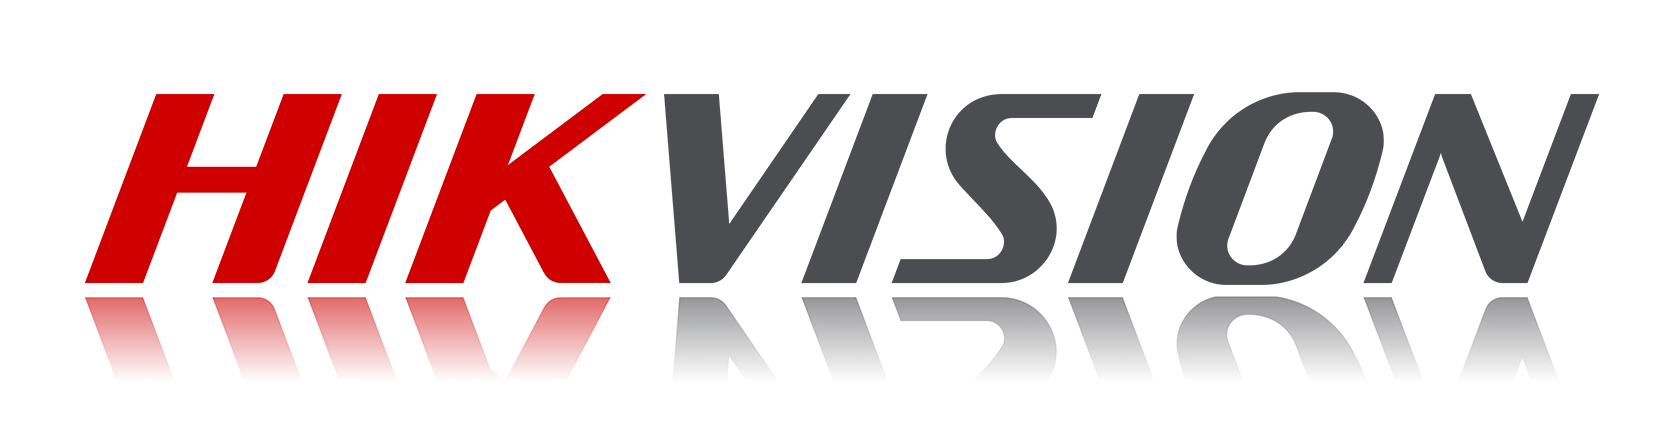 DS-KIS702EY, HIKVISION - Kit de Videoportero (Monitor + Placa exterior +  Hub conversor), Tecnología 2 hilos con TCP/IP & WiFi, Montaje en  Superficie